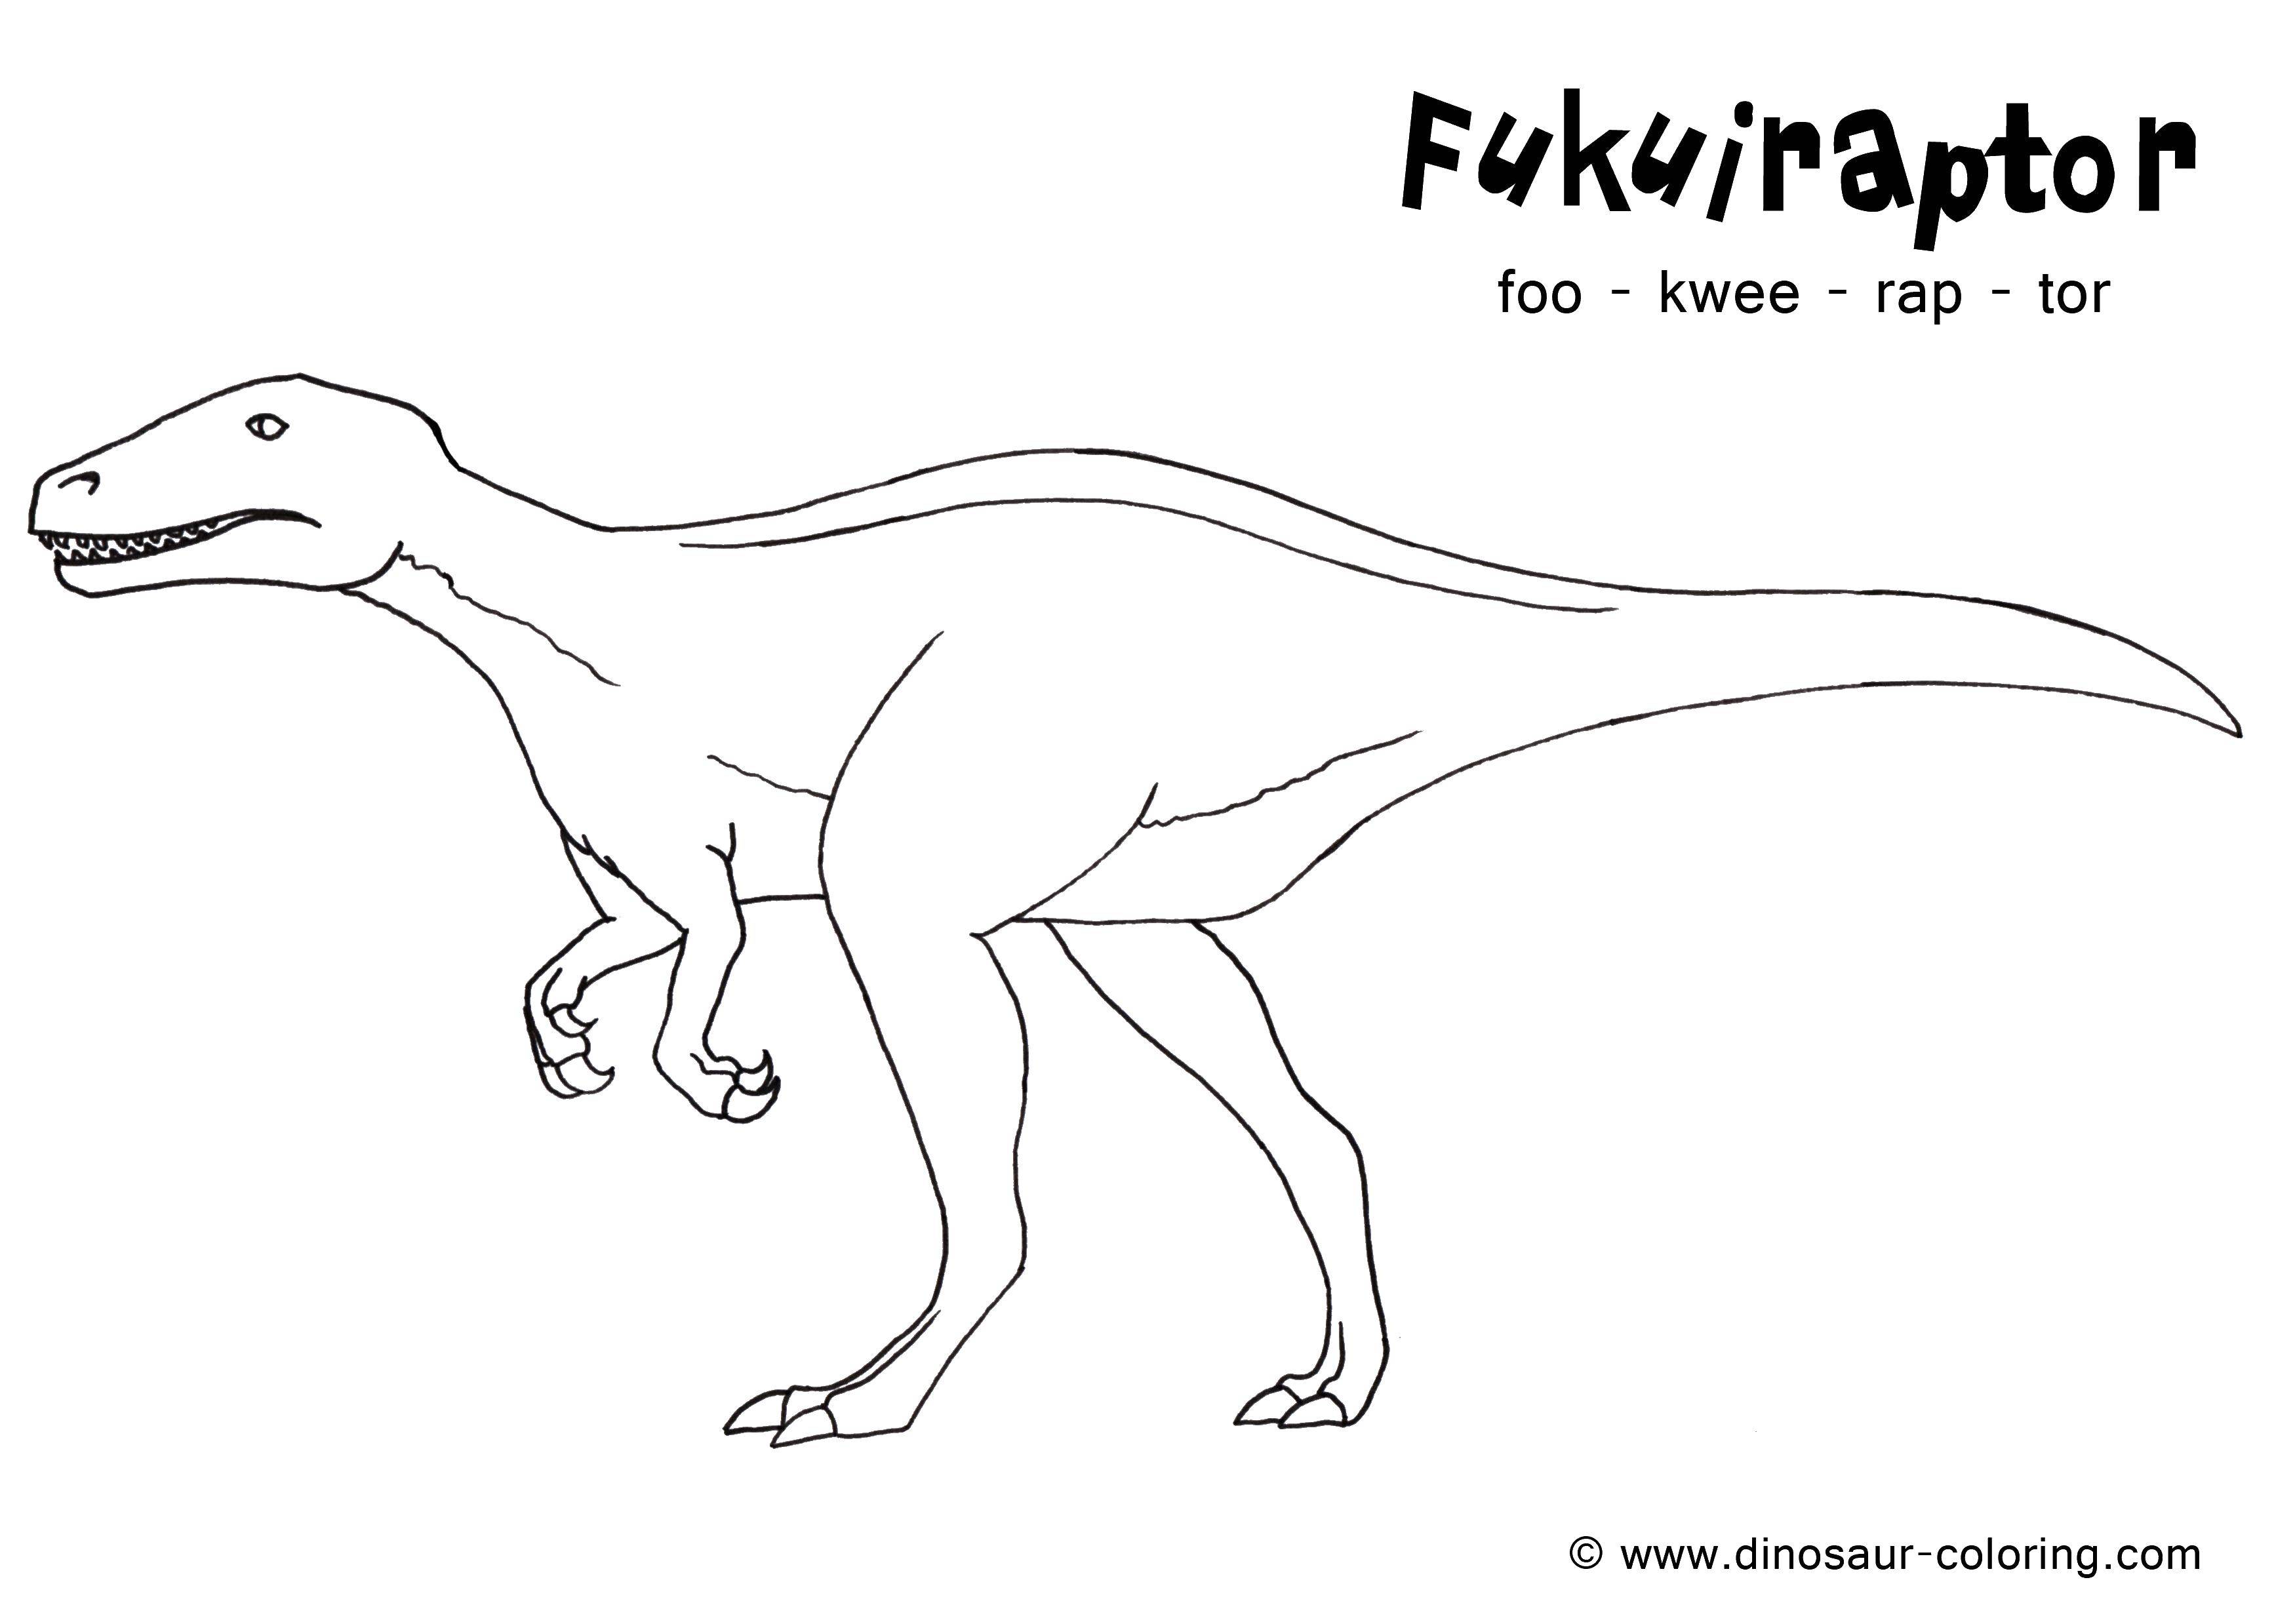 Coloring Dinosaur pokeradar. Category Jurassic Park. Tags:  Dinosaurs.